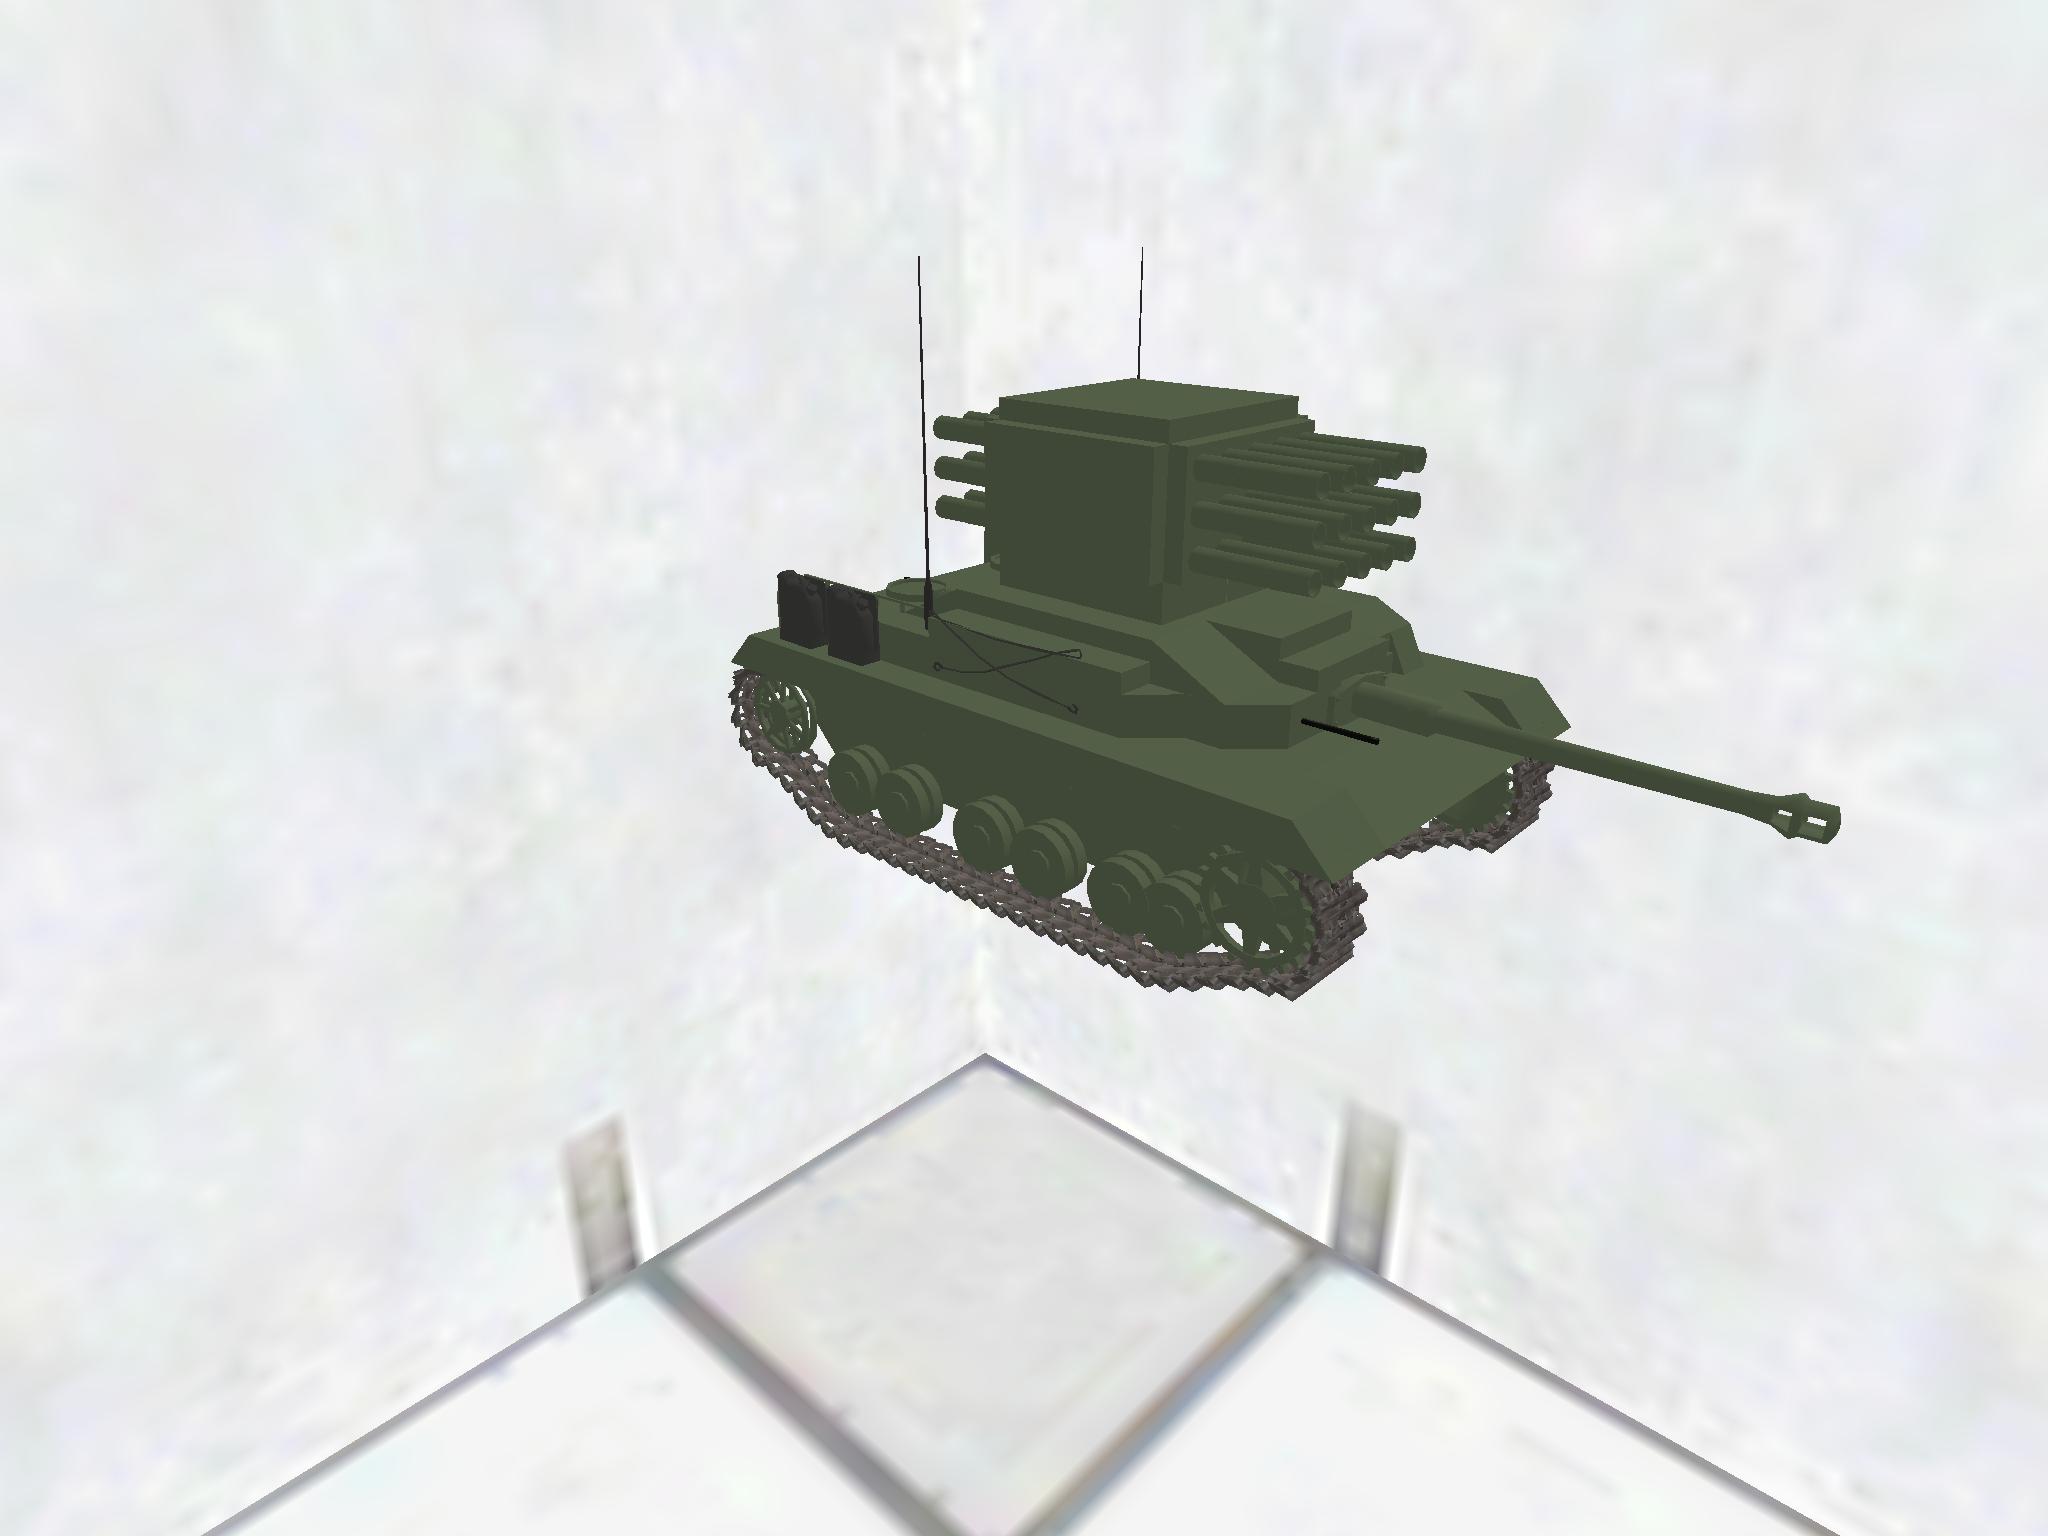 StuG III (Short 75mm Calliope)